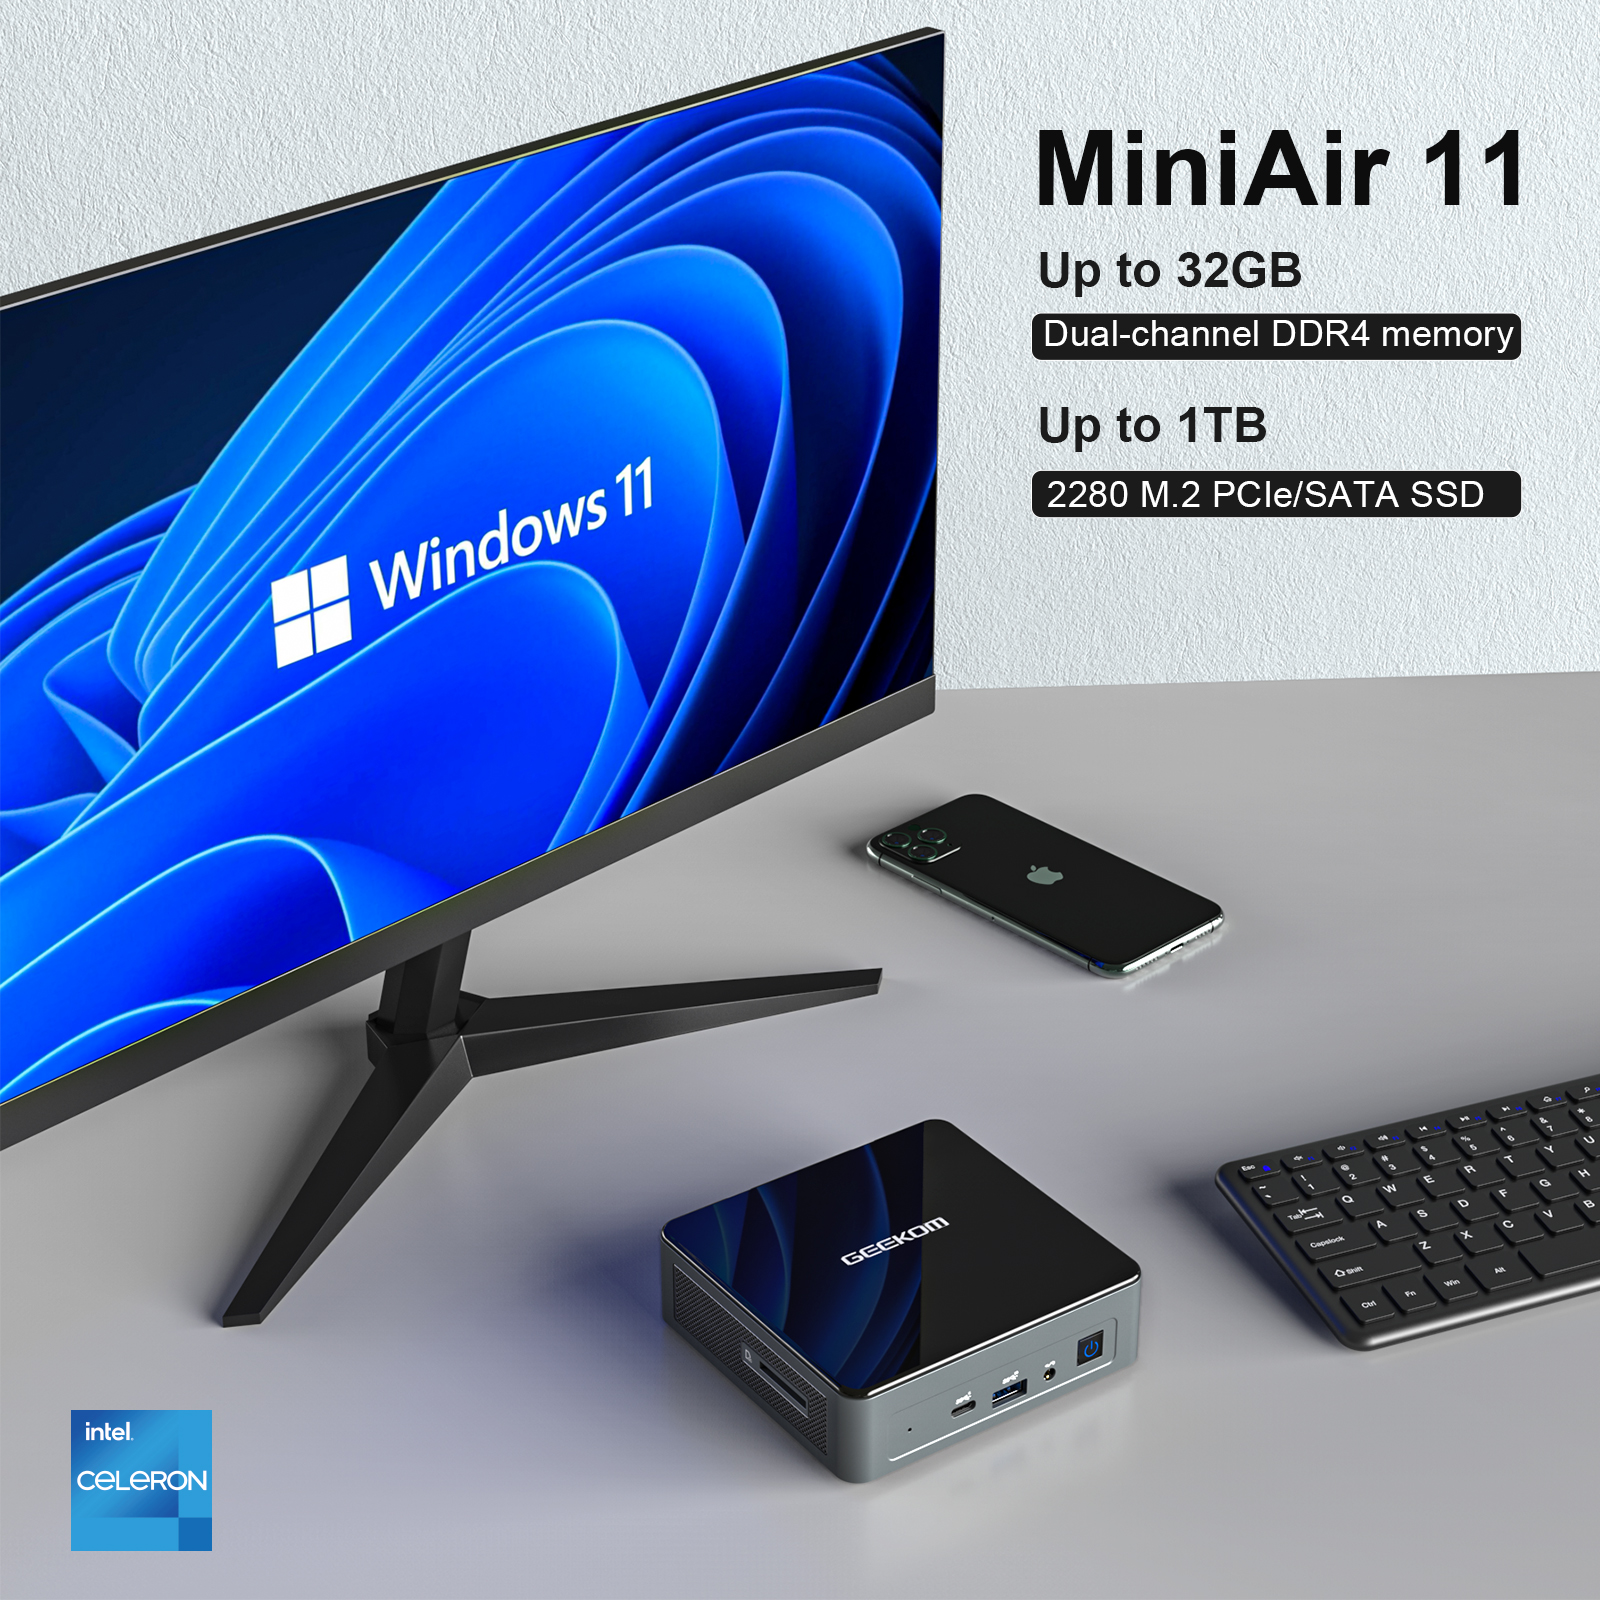 GEEKOM MiniAir 11: N5105 Mini PC with Windows 11 Pro